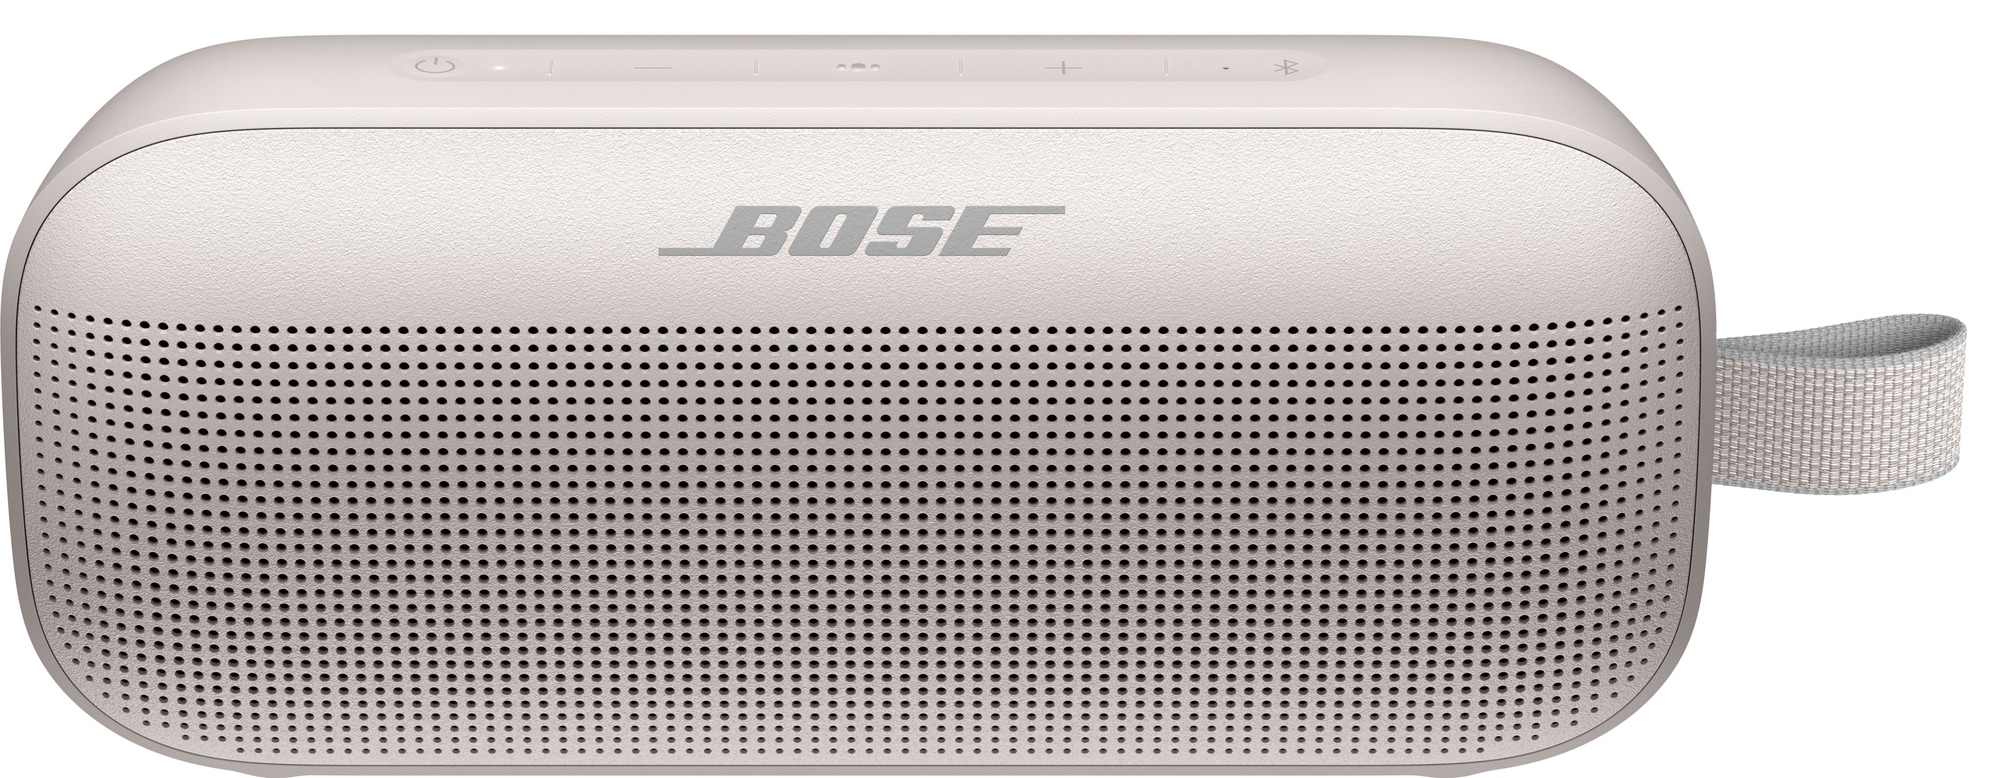 Bose SoundLink Flex trådløs transportabel smoke) | Elgiganten